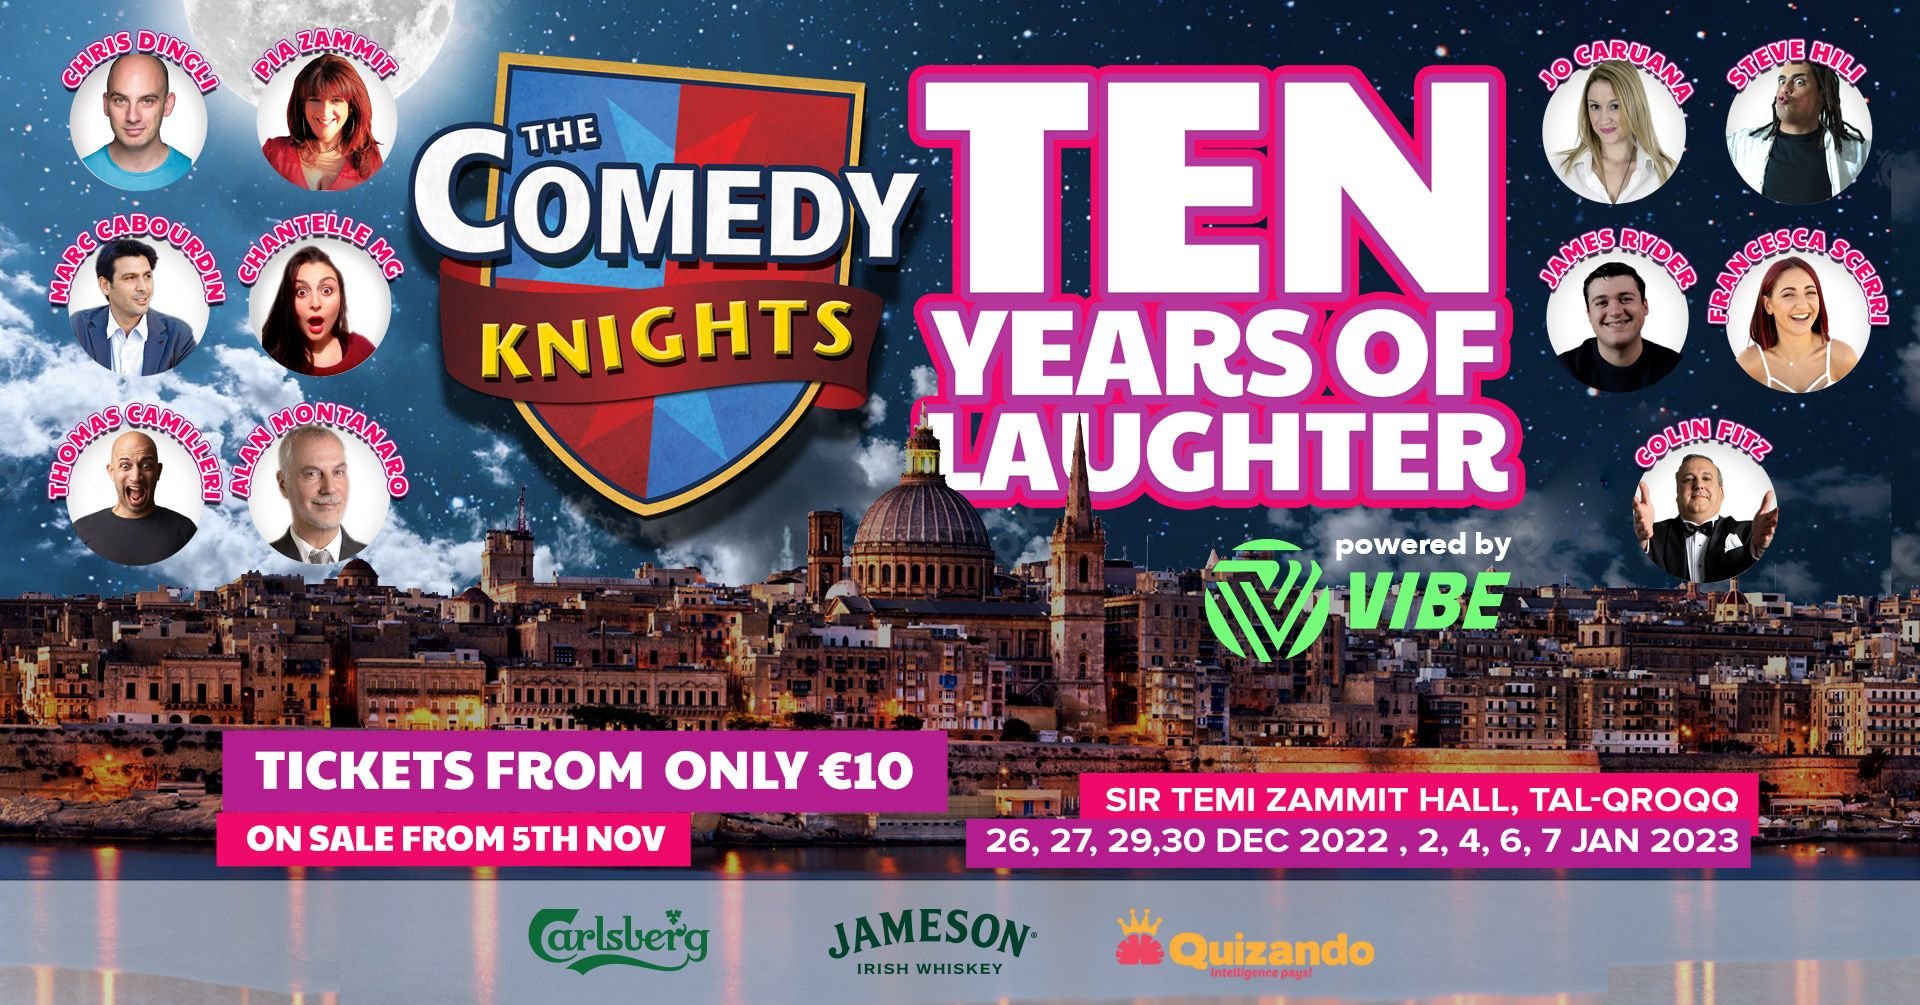 Comedy Knights: Ten Years of Laughter! malta, Comedy knights malta